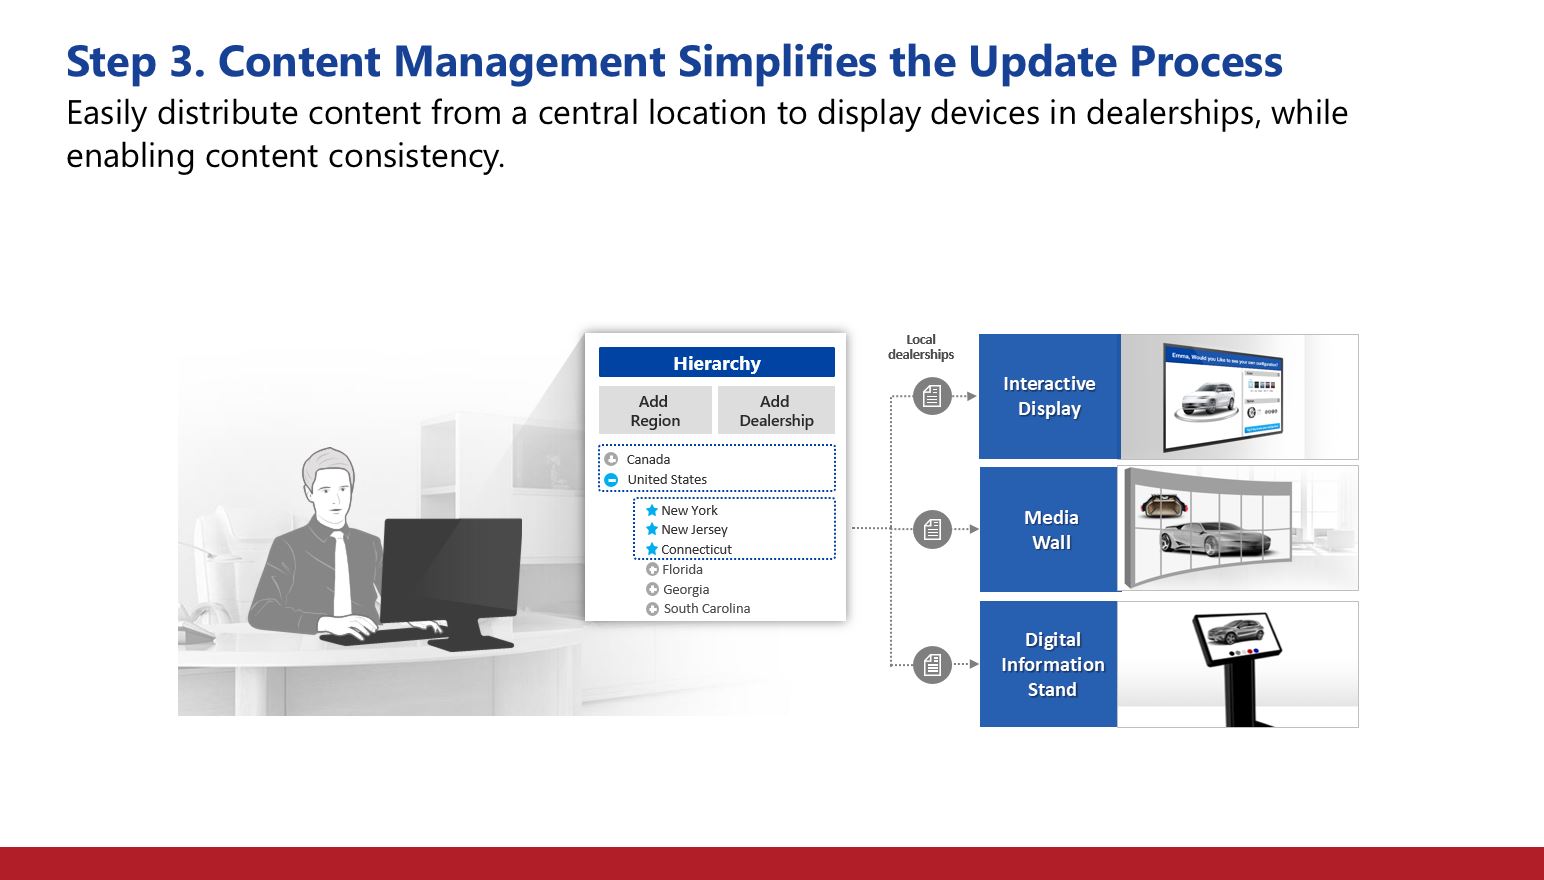 Content management simplified